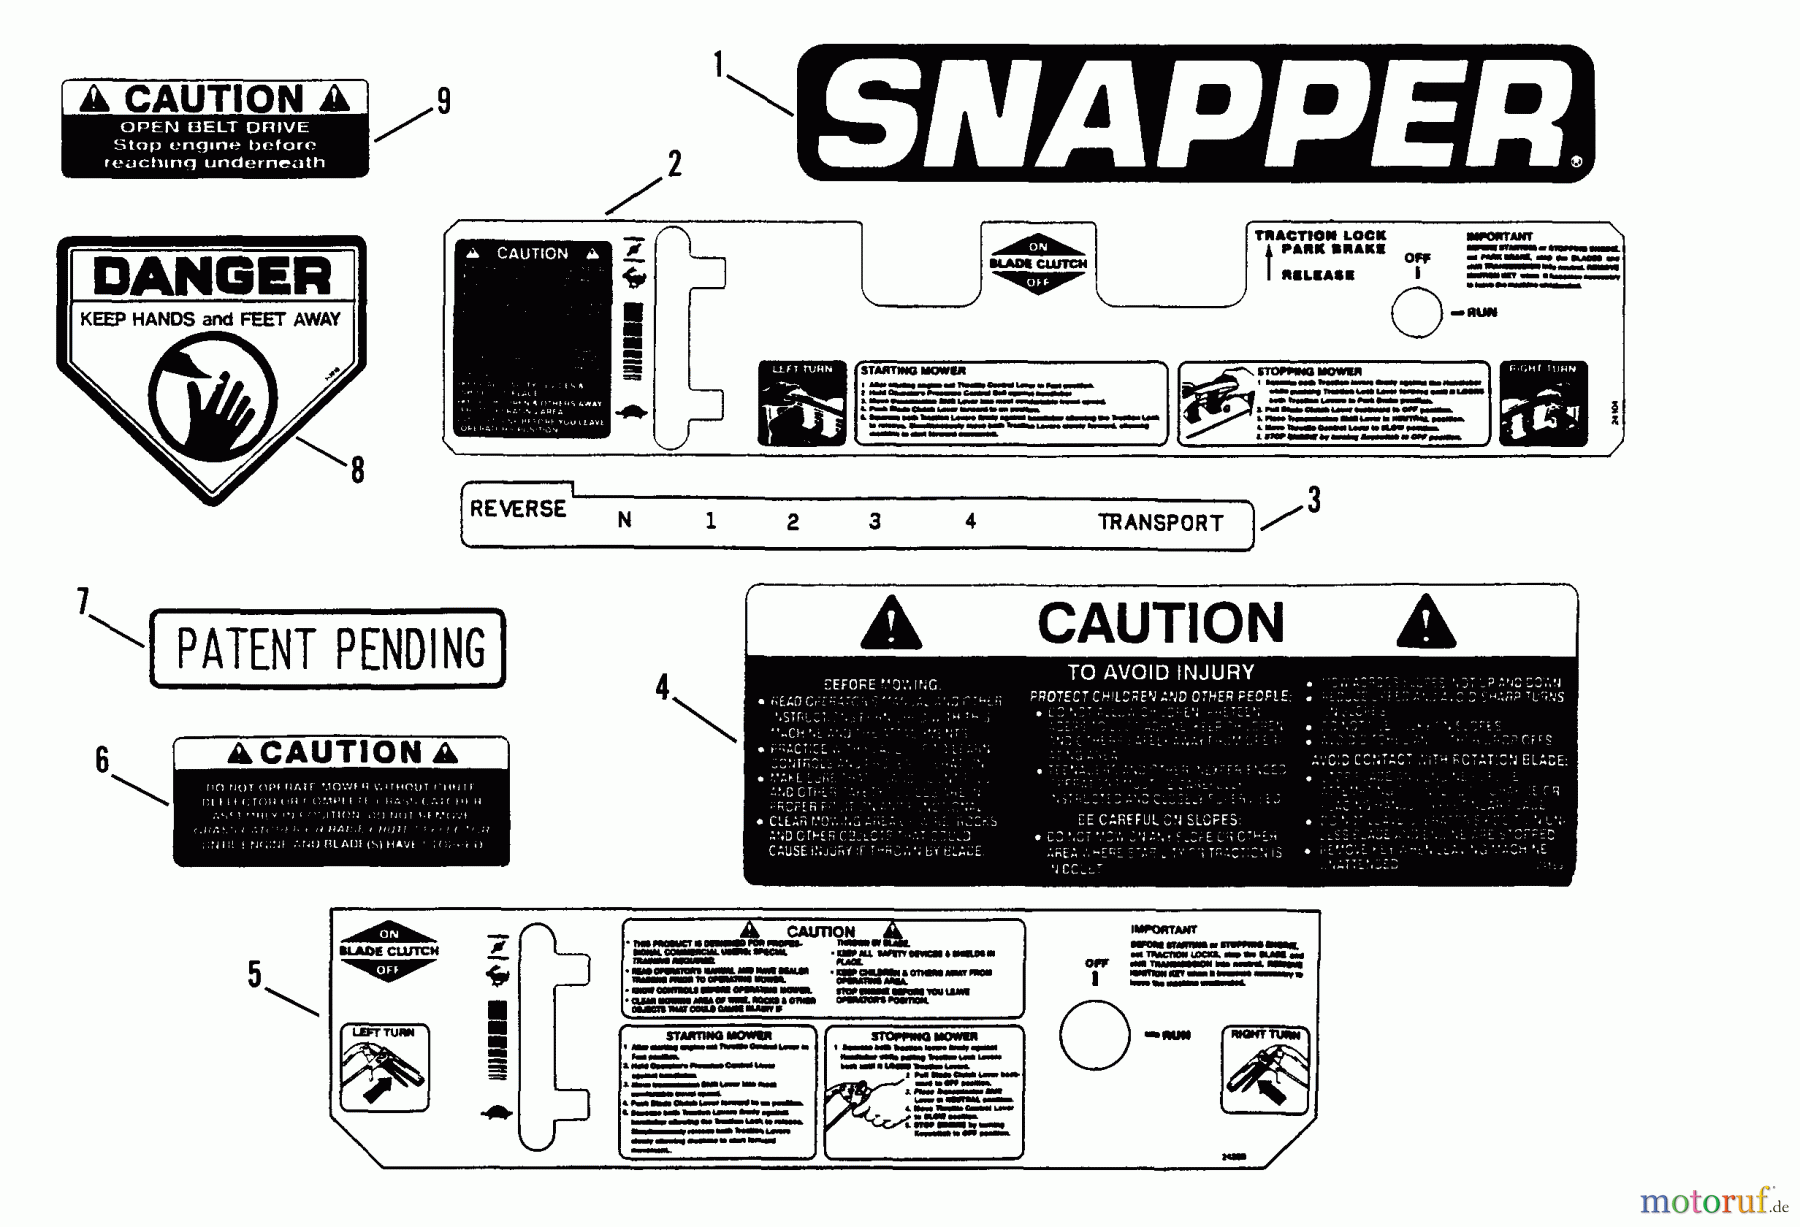  Snapper Rasenmäher für Großflächen PP71251KV - Snapper Wide-Area Walk-Behind Mower, 12.5 HP, Gear Drive, Pistol Grip, Series 1 Decals